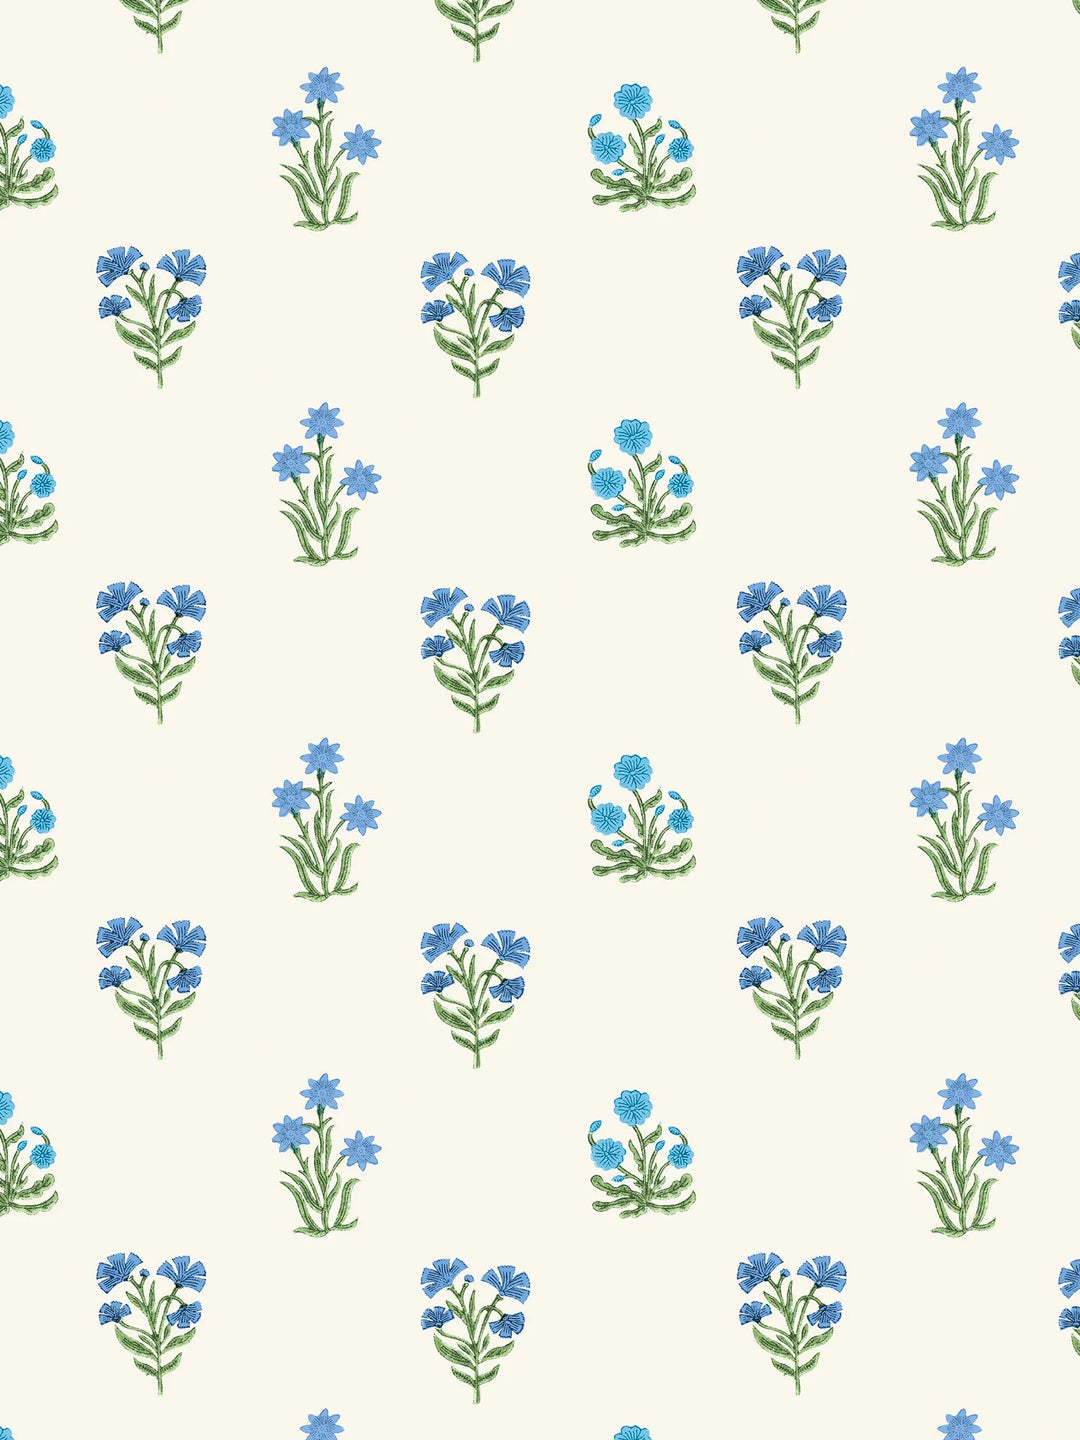 jaipur-flower-wallpaper-block-printed-indian-textile-design-dado-atelier-sapphire-blue